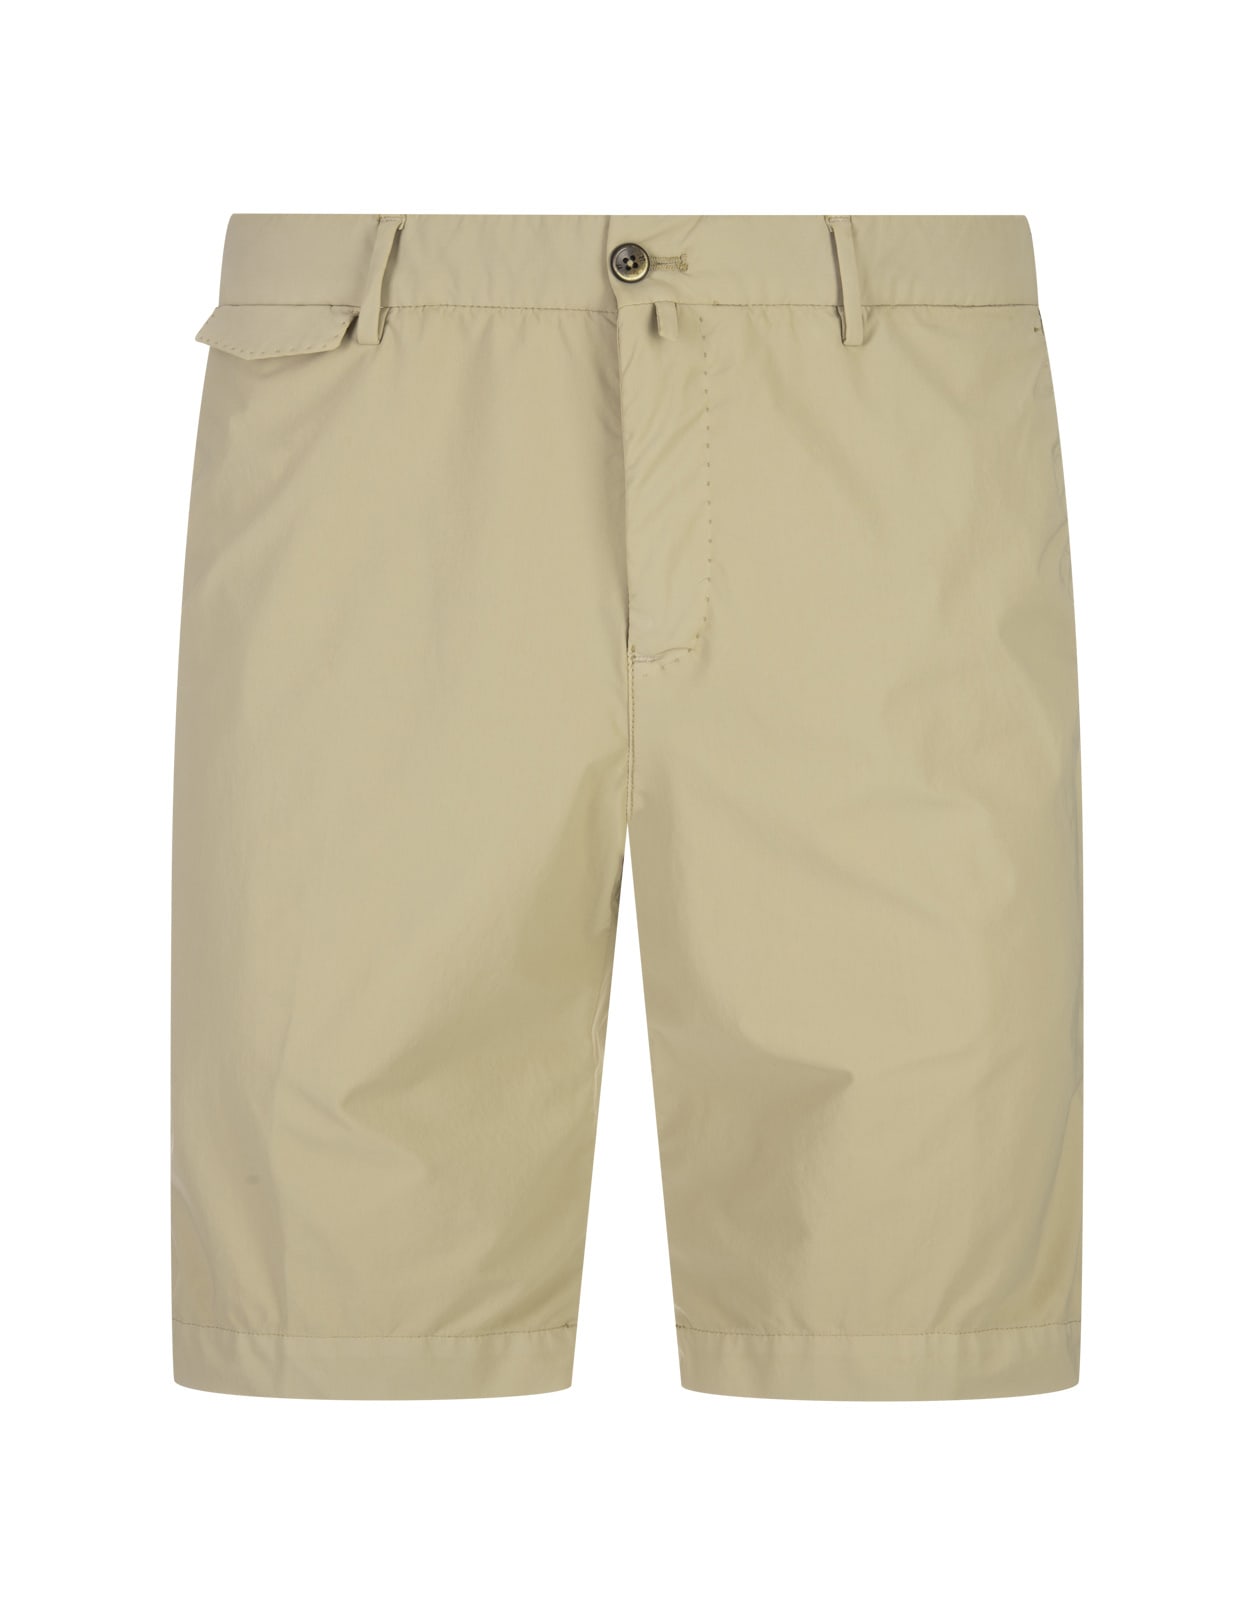 Pt Bermuda Green Stretch Cotton Shorts